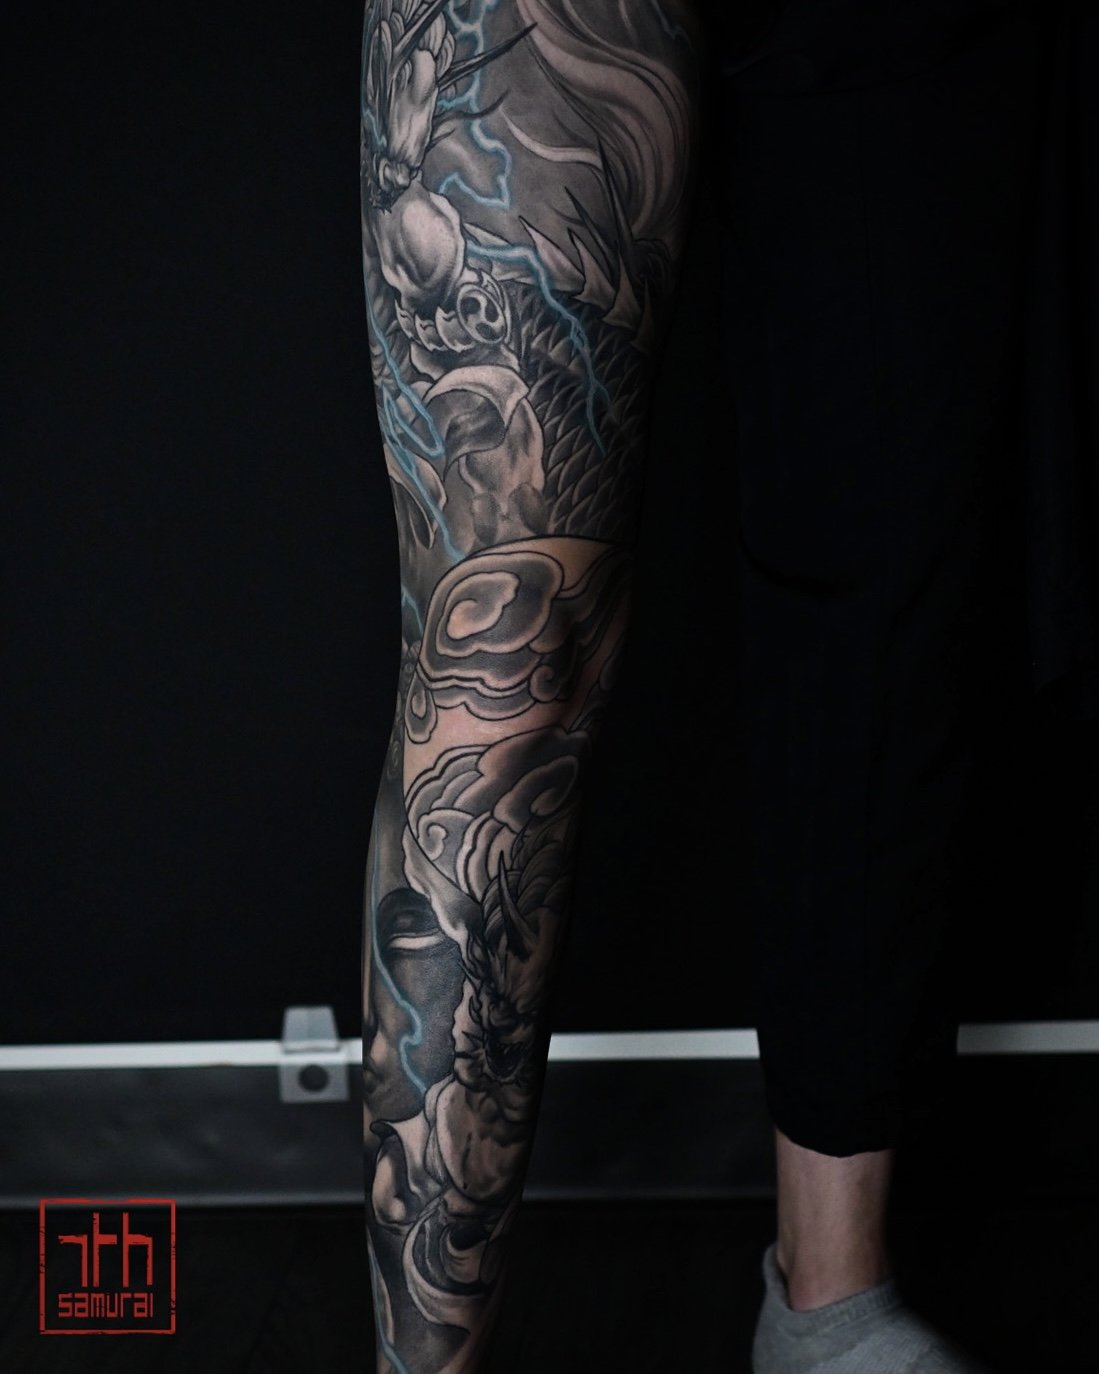 Raijin thunder god Fujin wind god Men's neo japanese asian leg sleeve tattoo with blue lightning highlights  asian artist: Kai 7th Samurai. YEG Edmonton, Alberta, Canada 2023 best 2024 